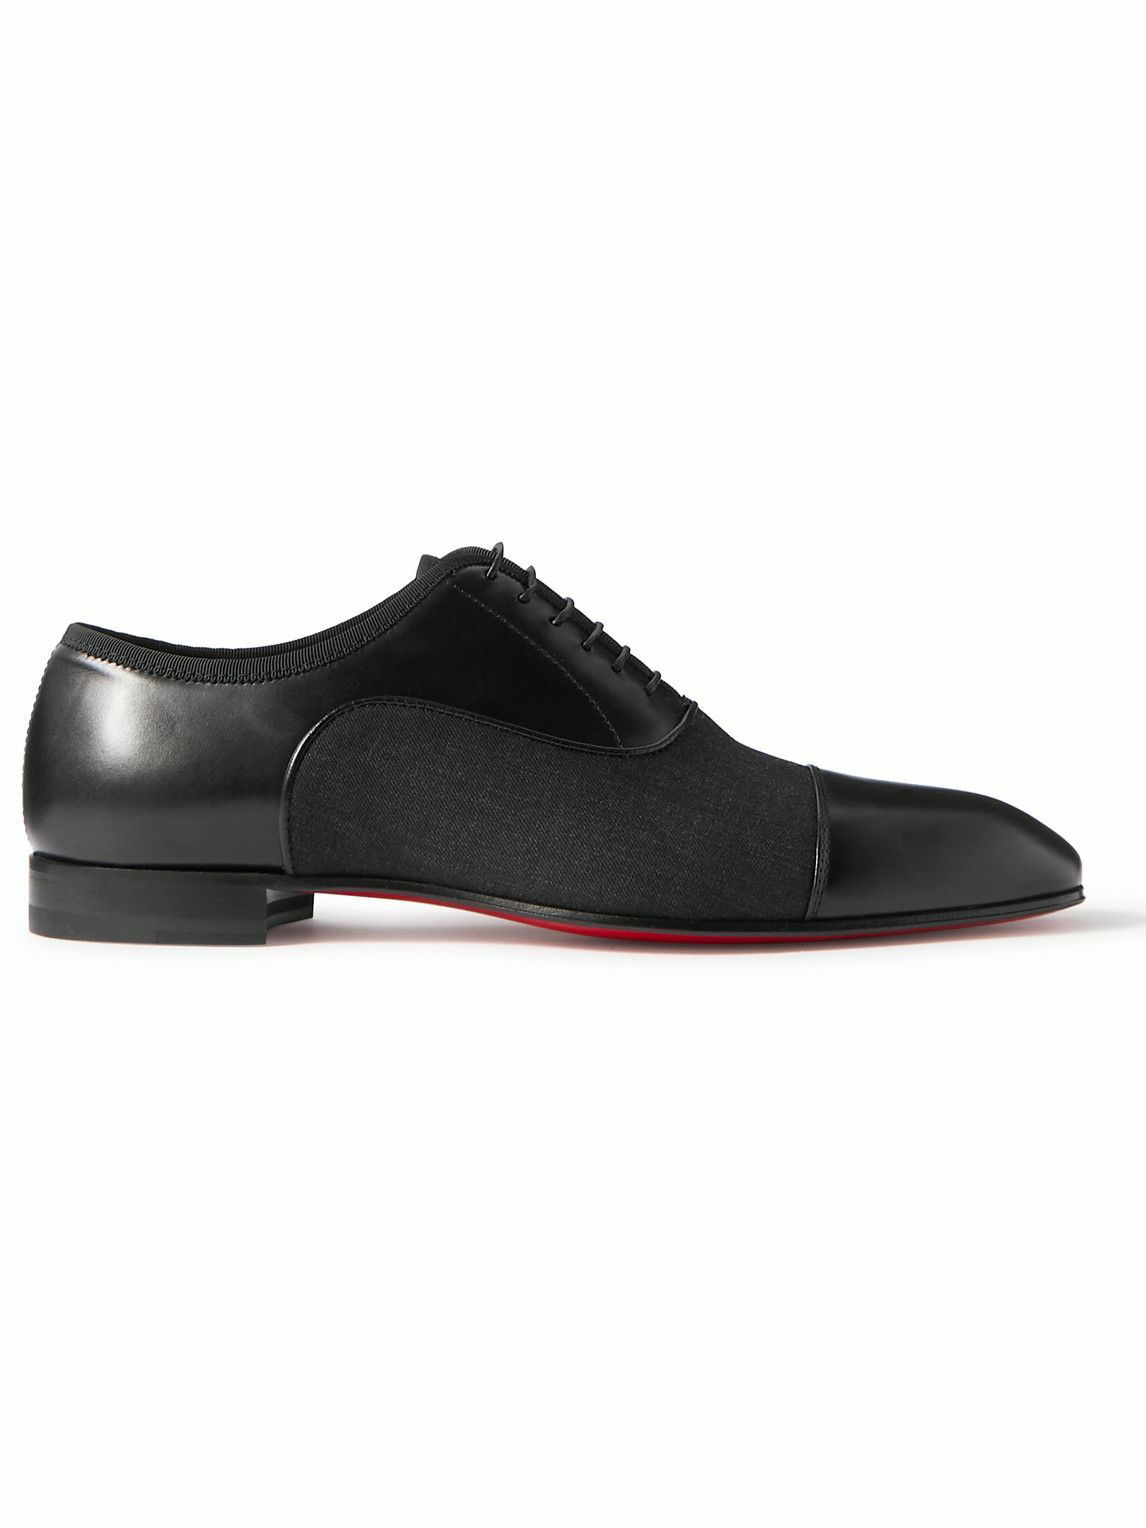 Greggo Suede Oxford Shoes in Black - Christian Louboutin